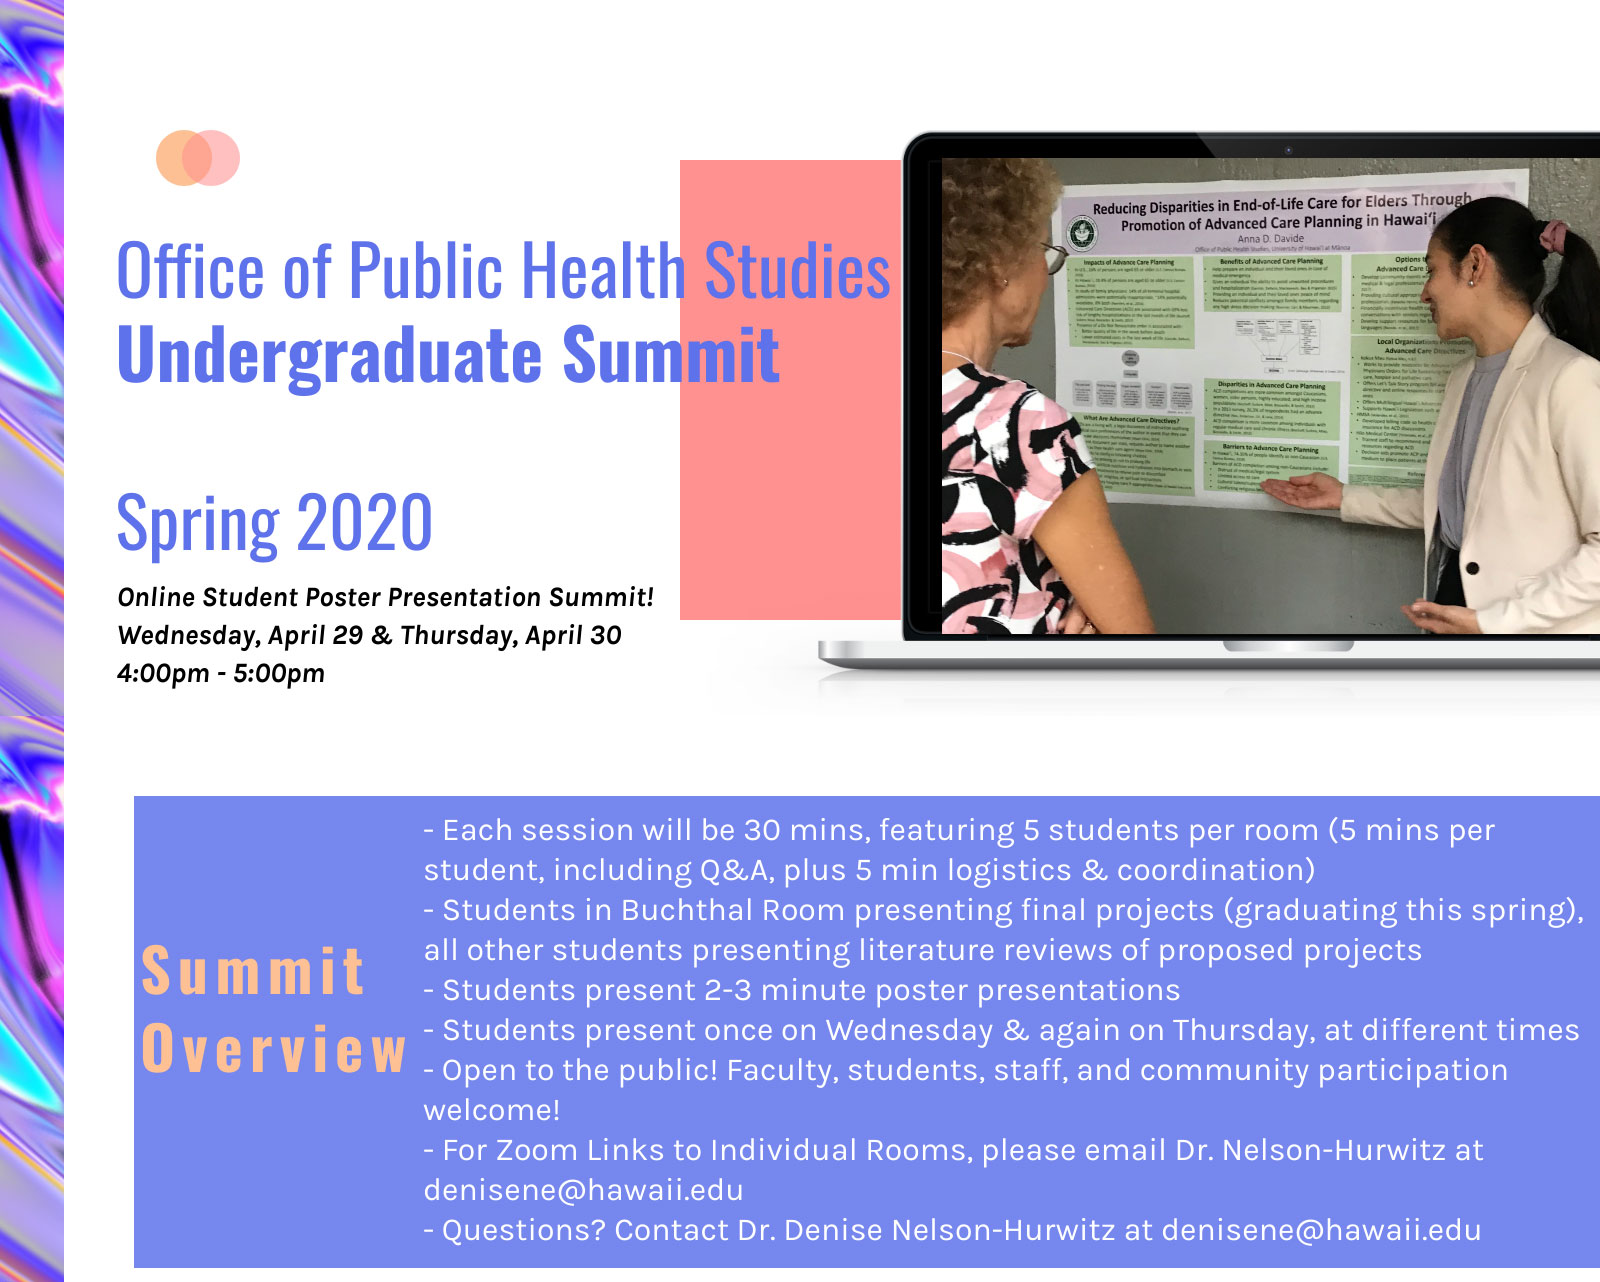 Spring 2020 Undergraduate Summit Flyer (4/29 & 4/30 from 4:00 - 5:00pm)